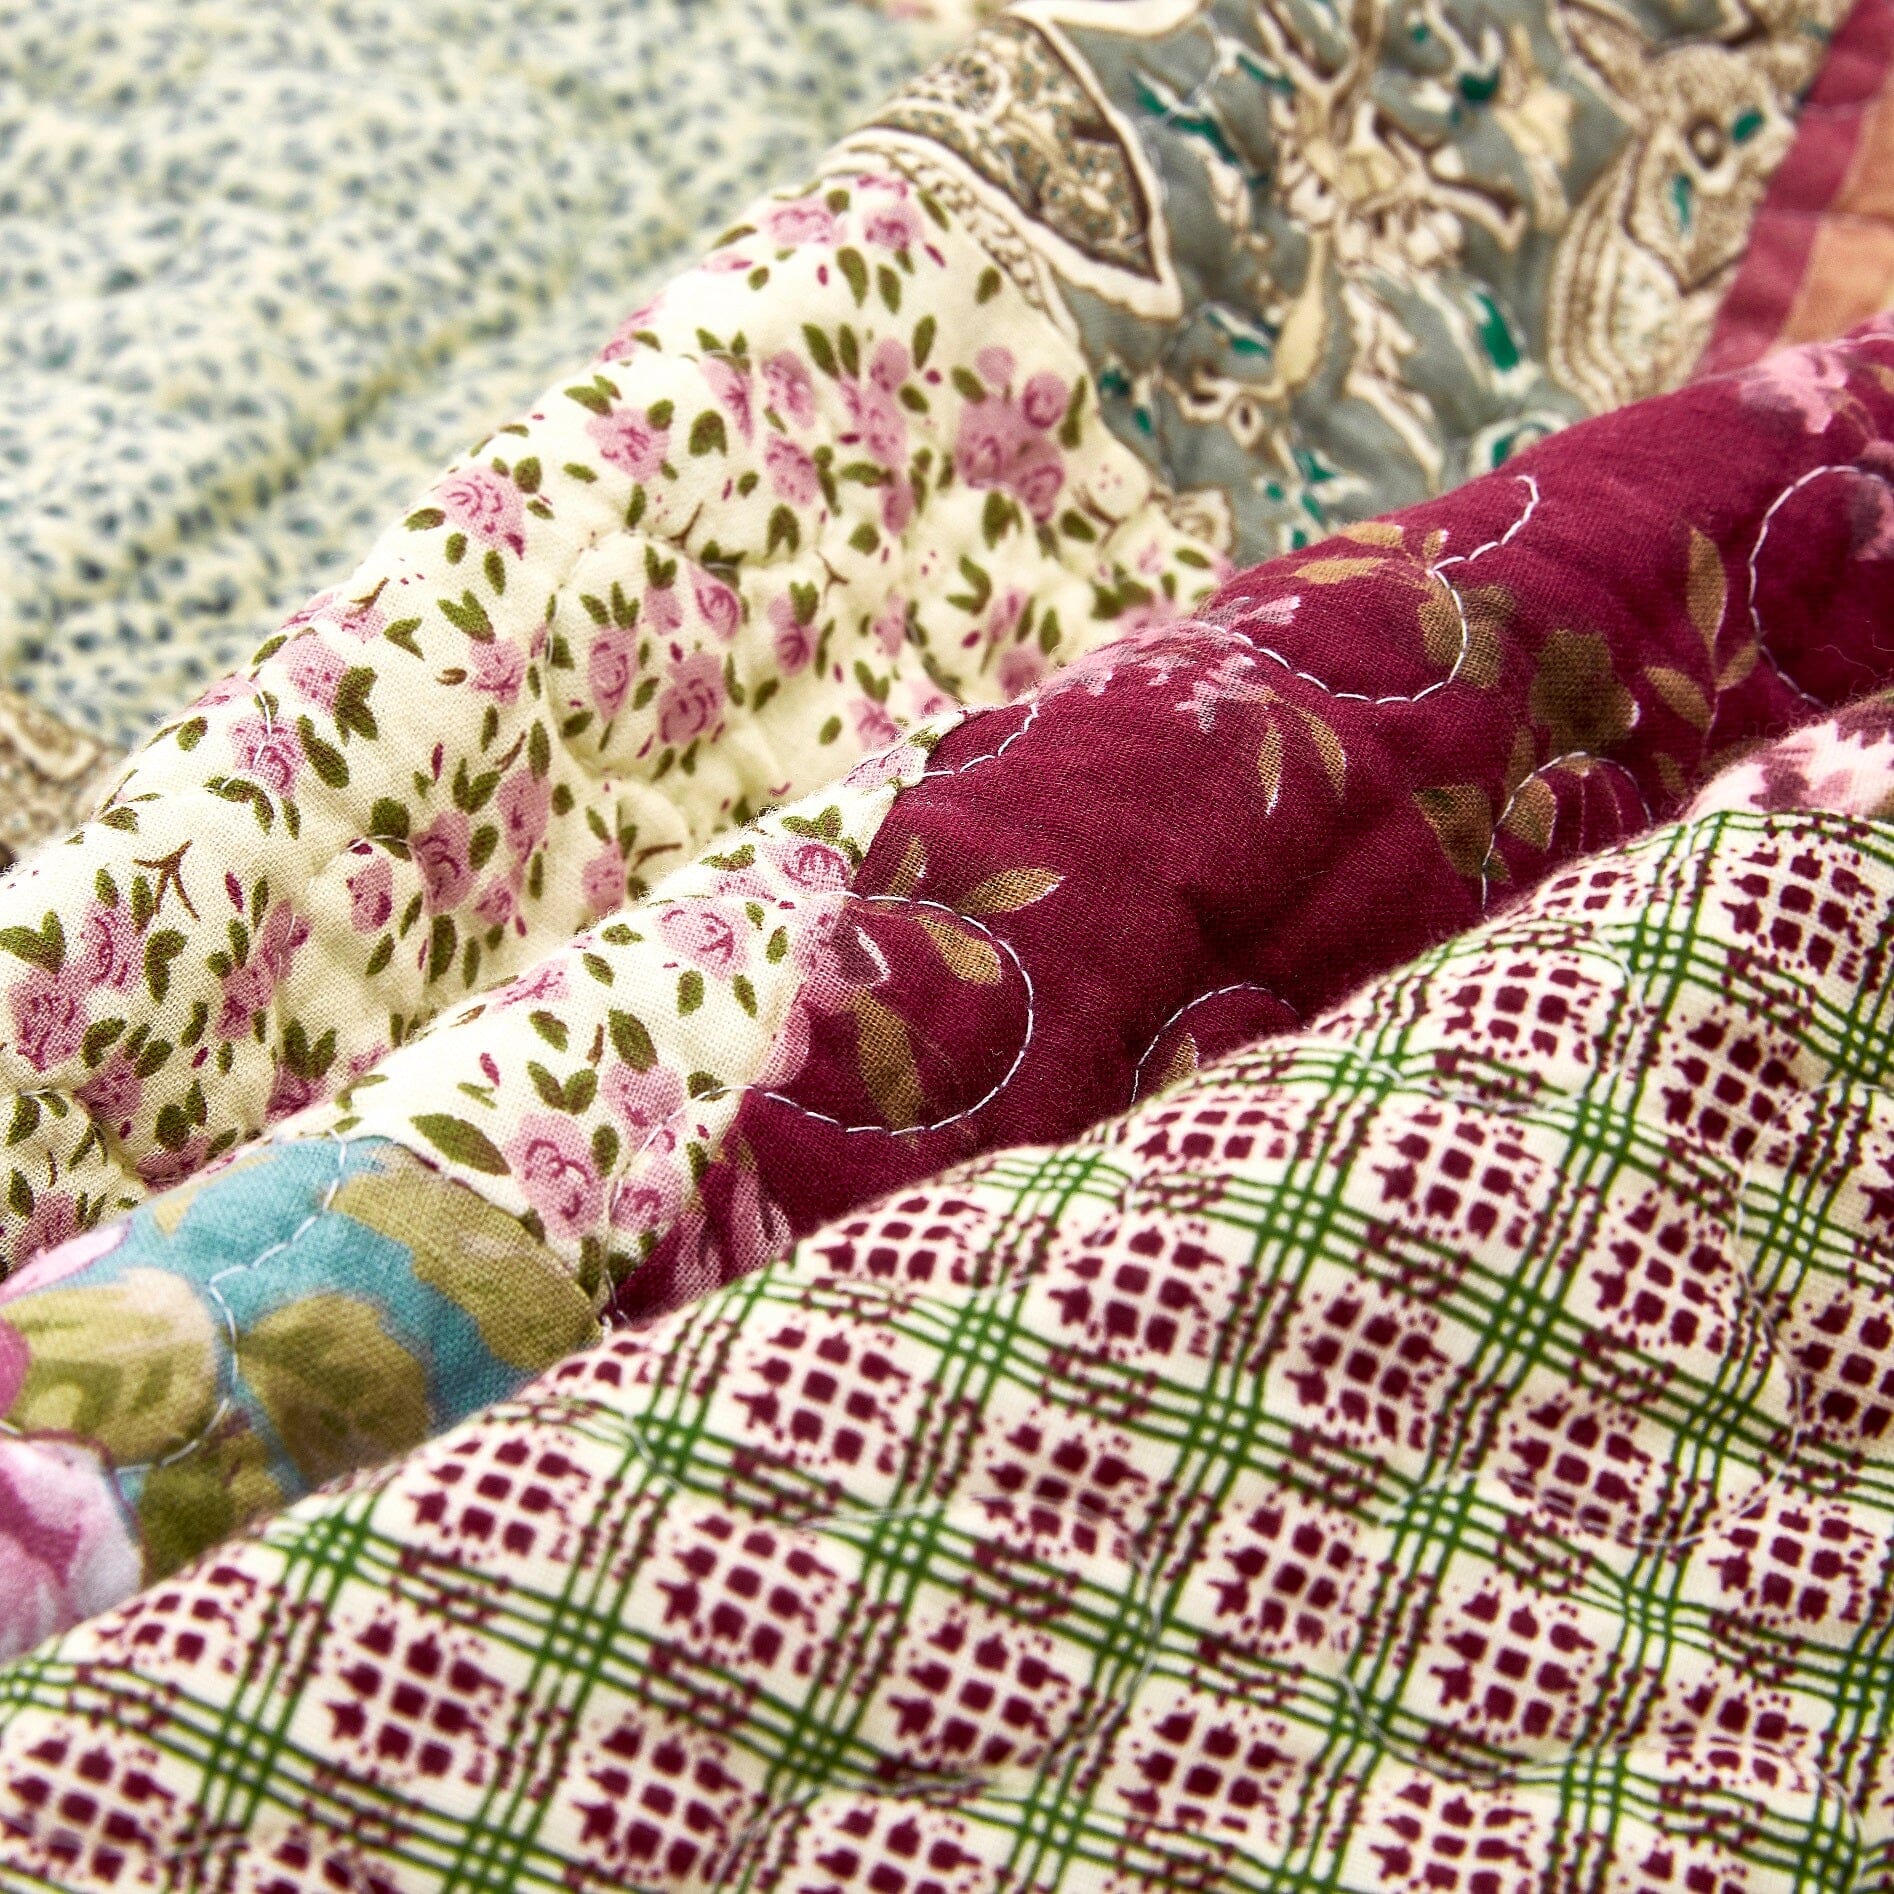 Tache Fairy Tale Tea Party Beige Burgundy Paisley Floral Cotton Patchwork Quilted Throw Blanket (DXJ103443) - Tache Home Fashion